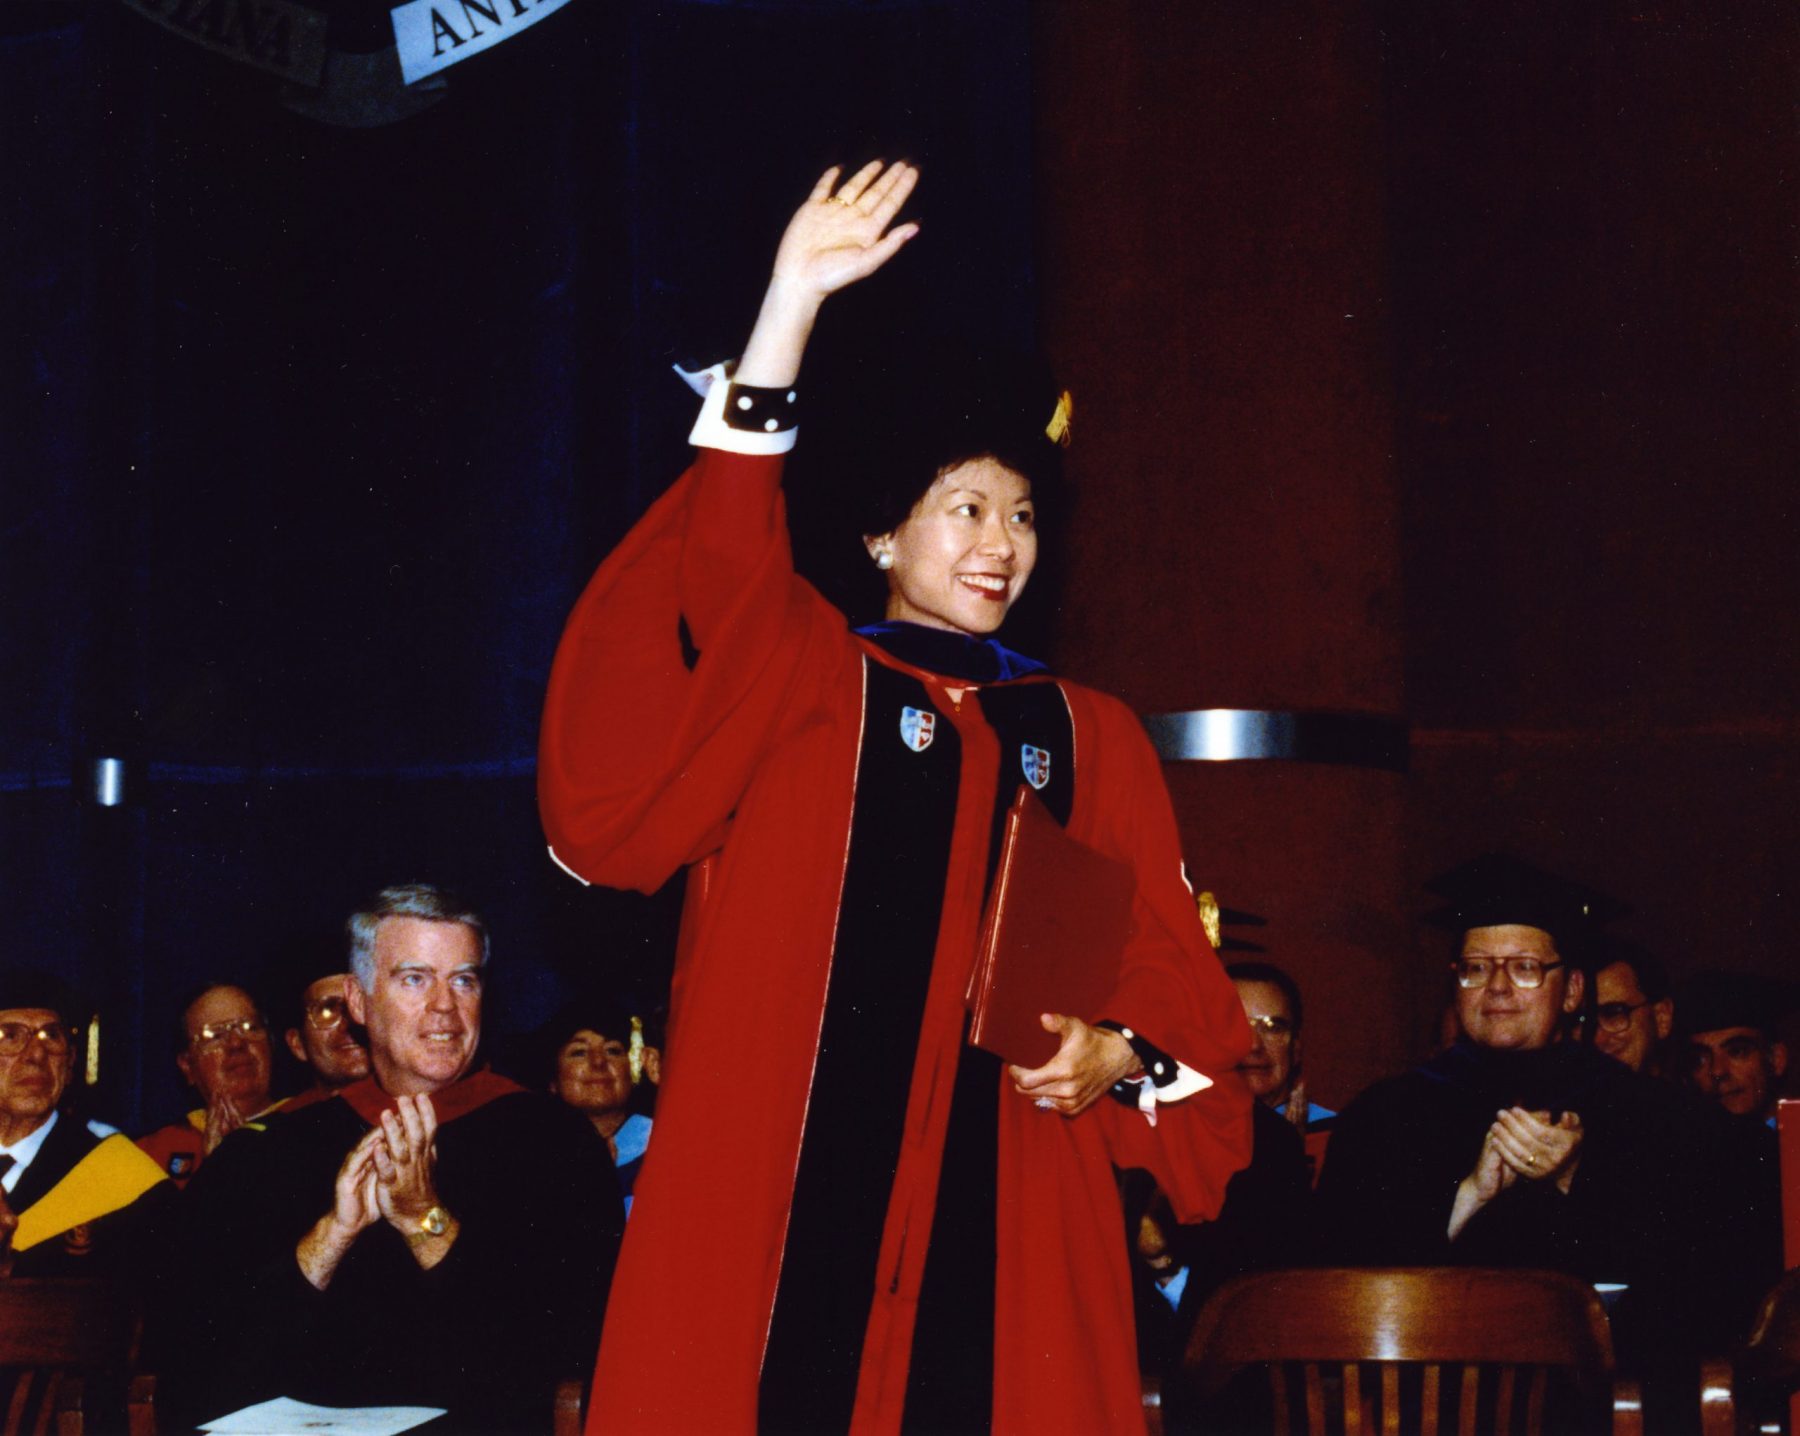 U.S. Deputy Secretary of Transportation Elaine Chao receiving an honorary doctorate degree from St. John's University in New York.